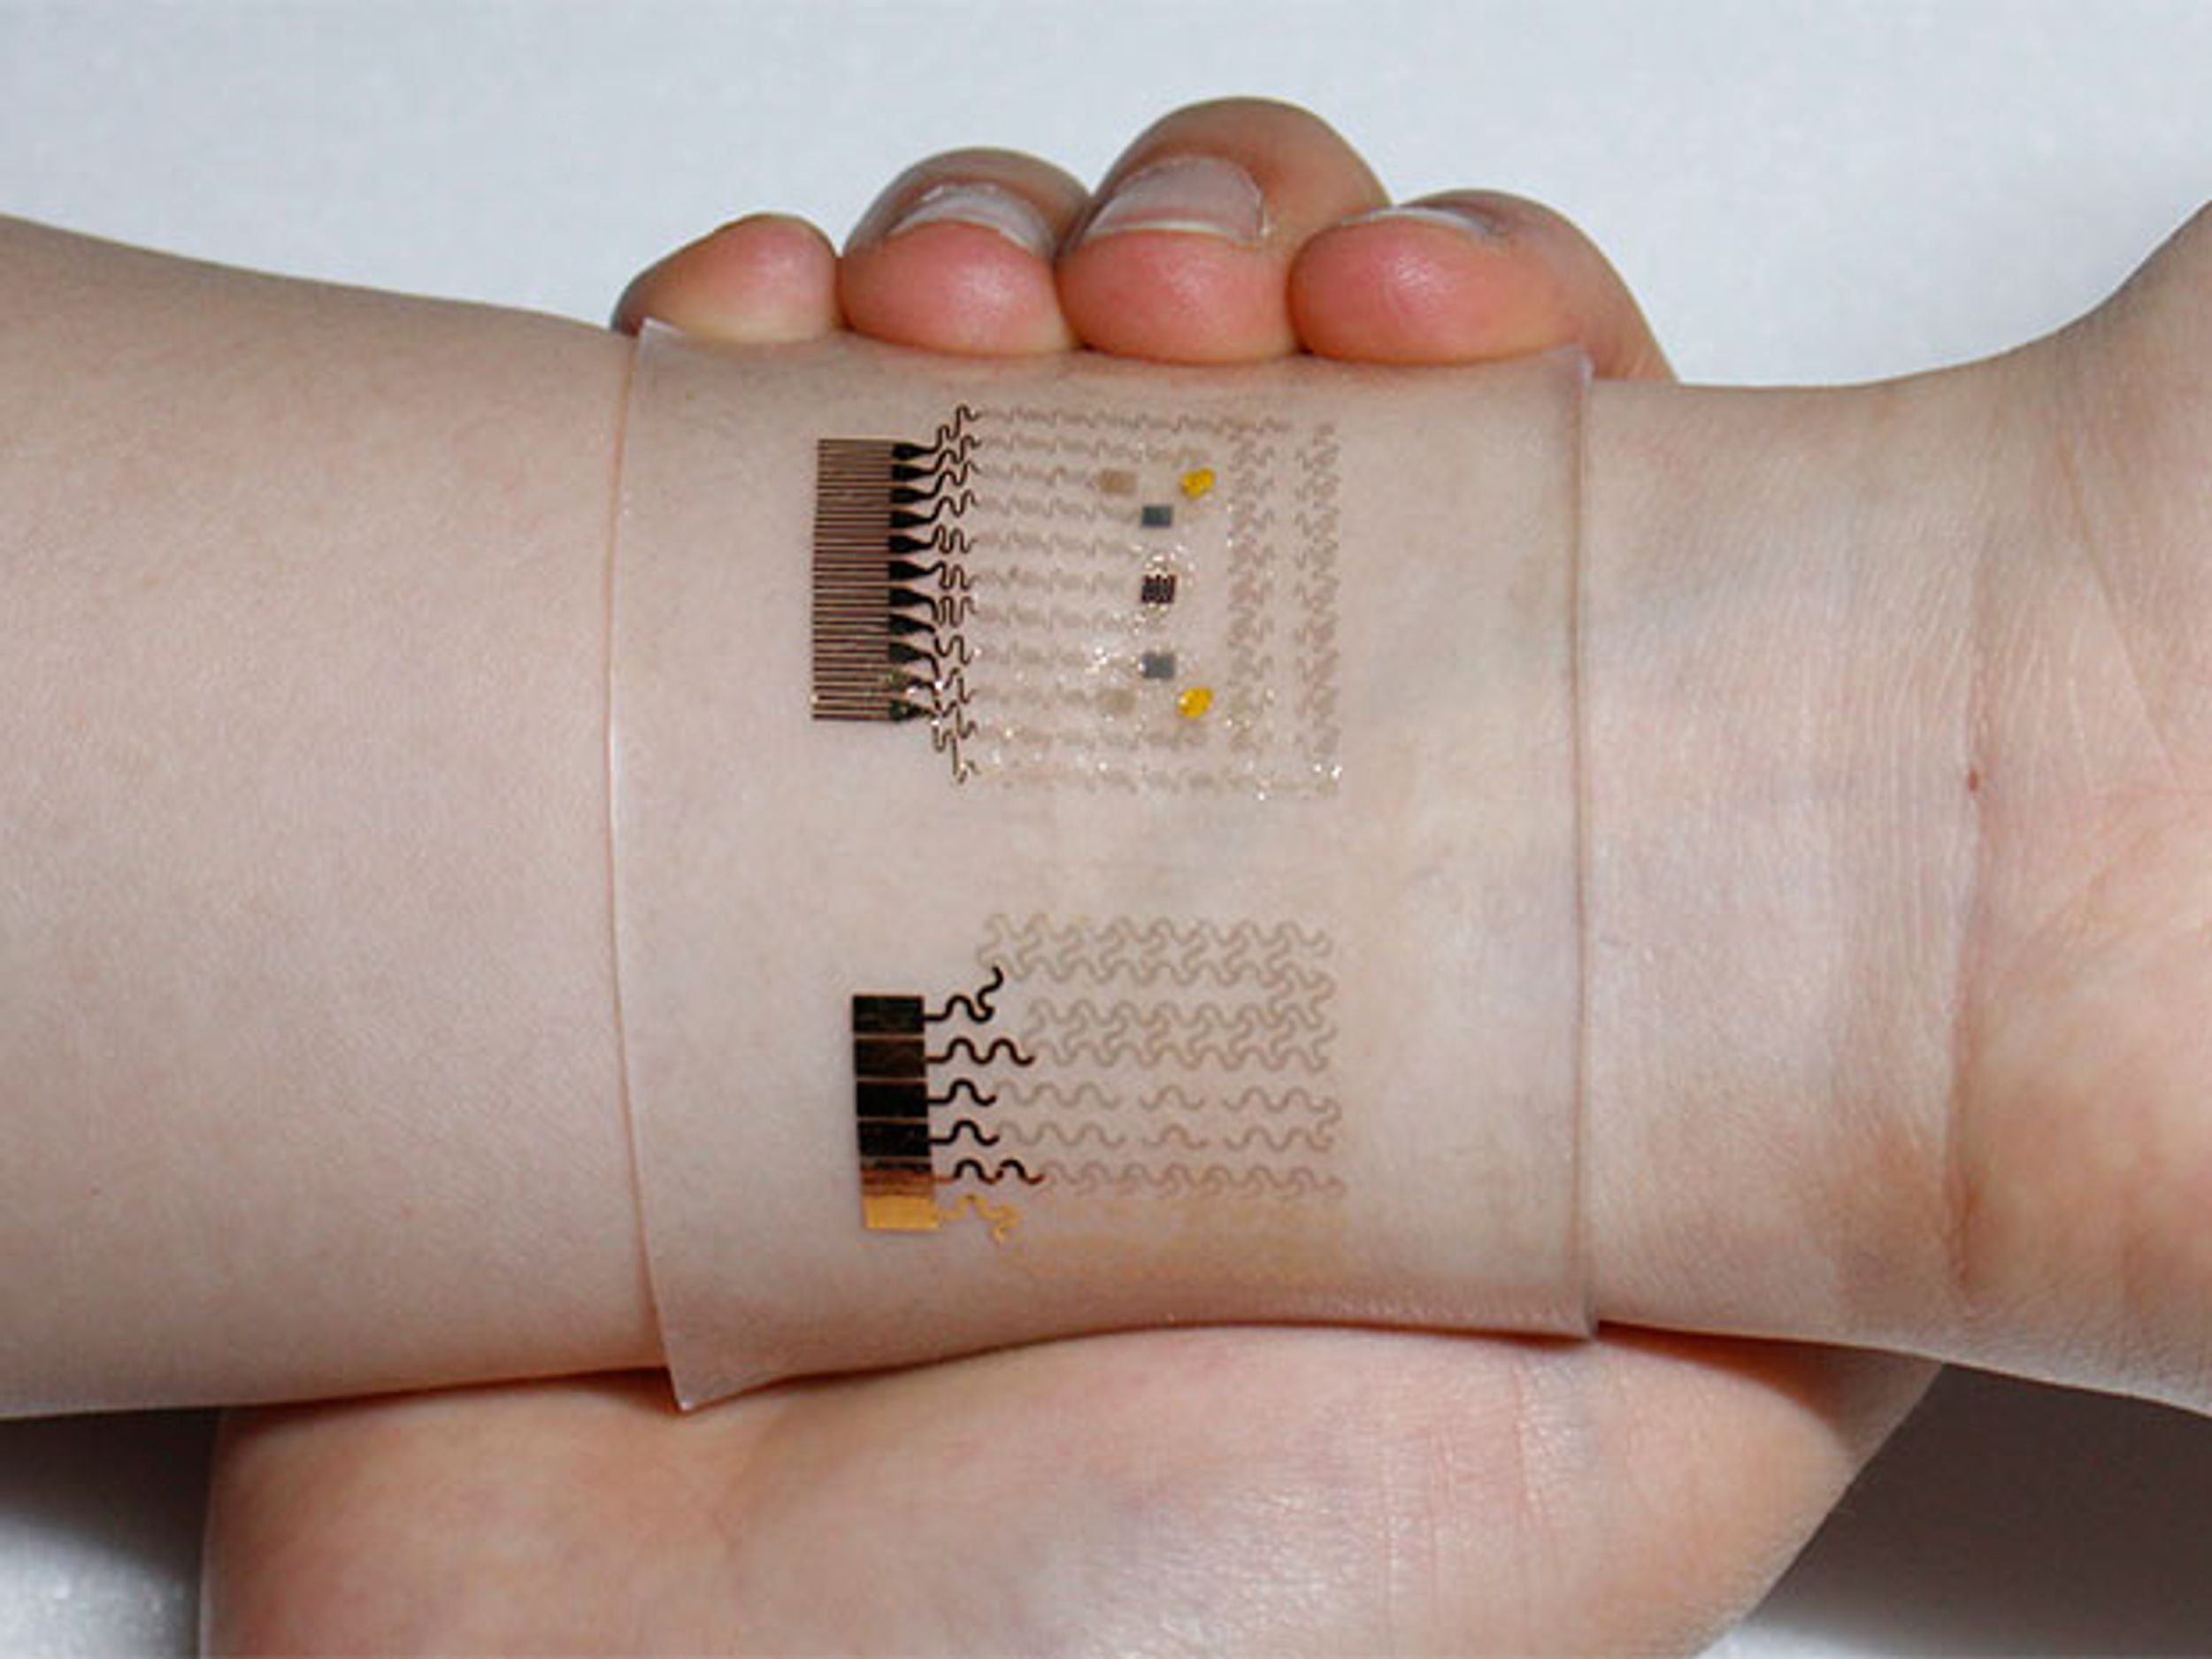 Graphene Wristband Senses Your Blood Sugar—and Treats It